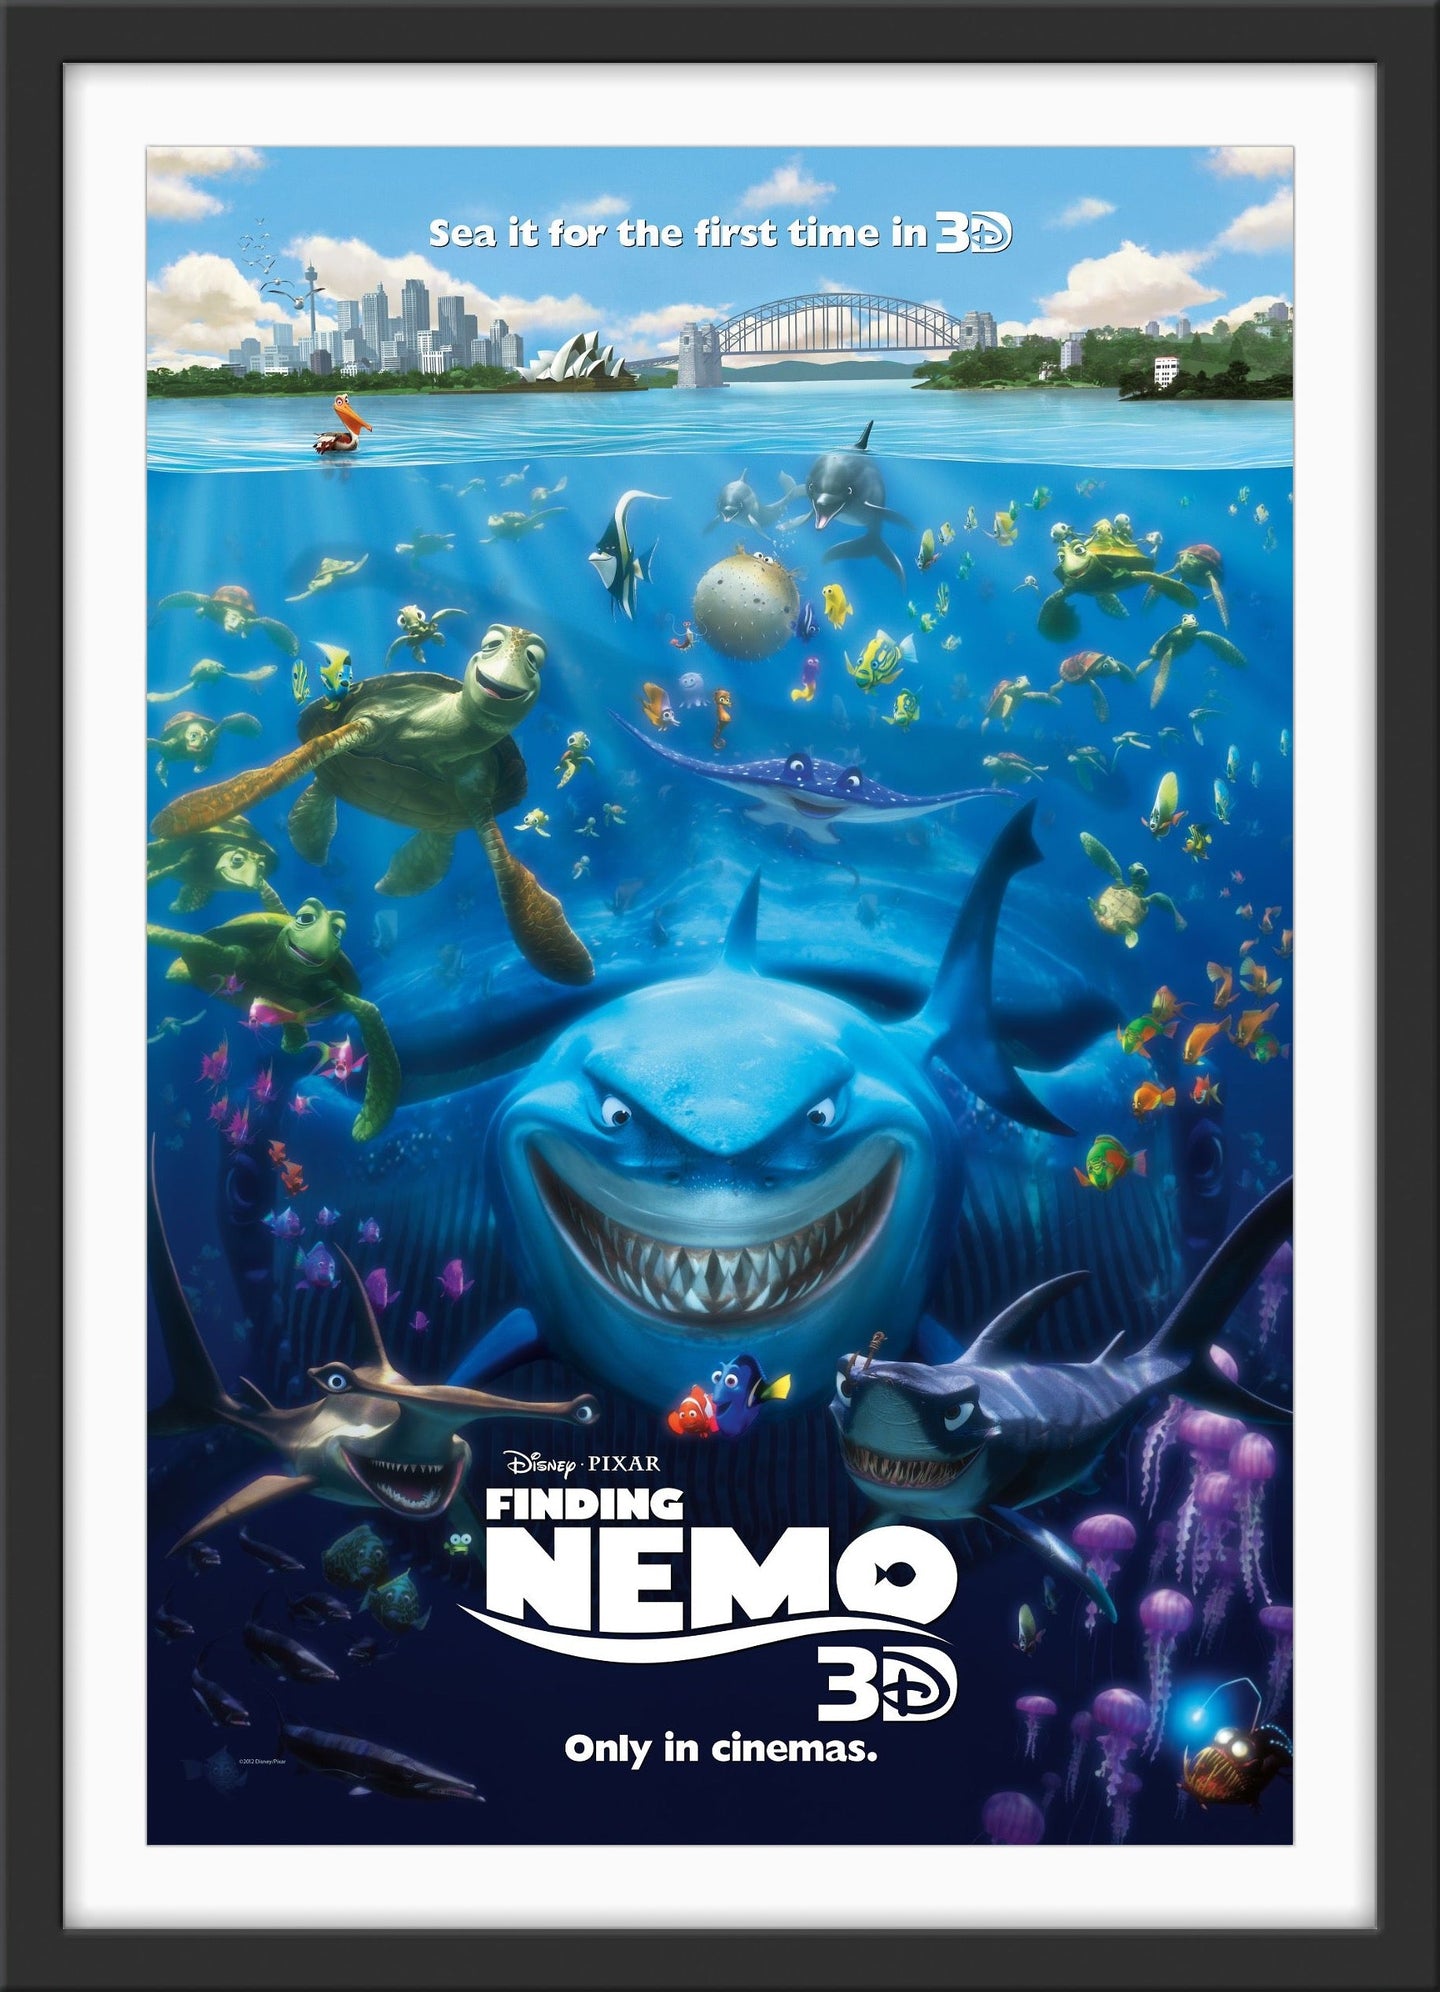 An original movie poster for the Disney Pixar film Finding Nemo